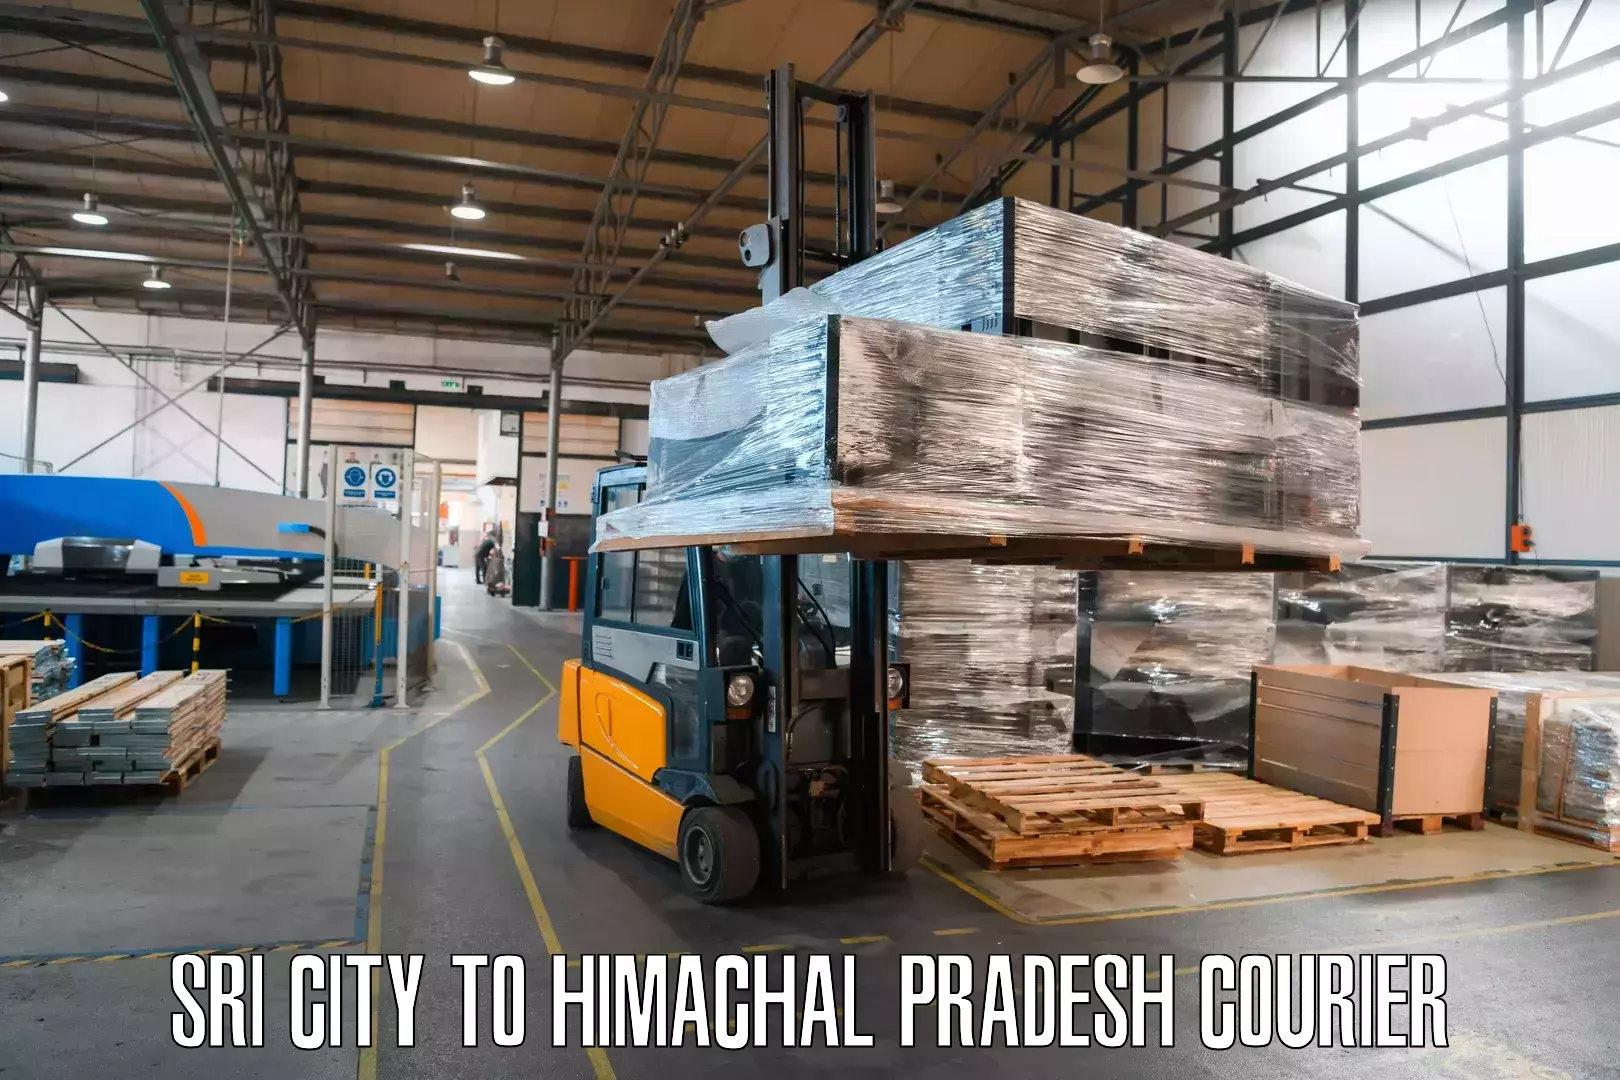 Courier service comparison Sri City to Himachal Pradesh